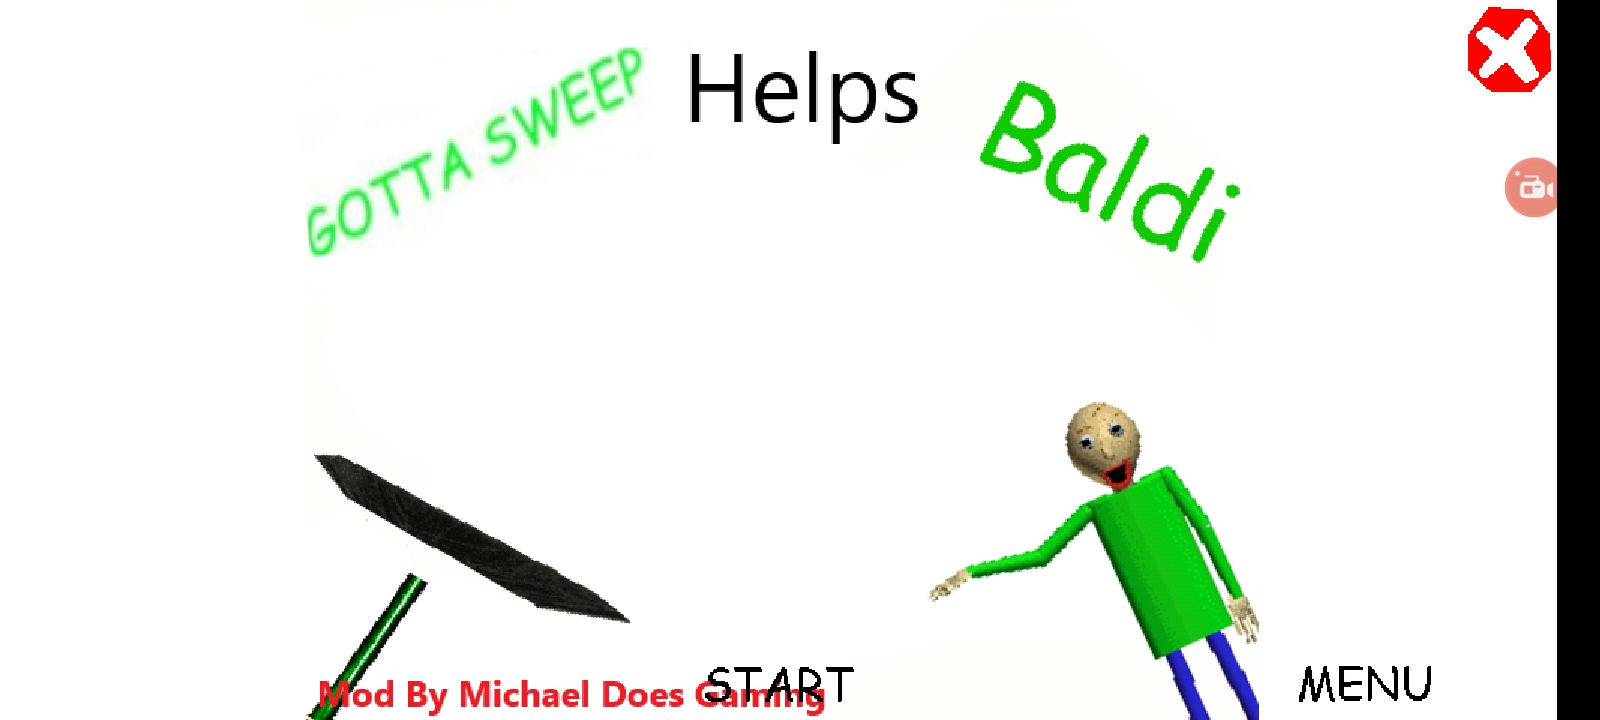 Baldi help. Gotta Sweep helps Baldi. Готта свип БАЛДИ. Retro helps Baldi. Gotta CWEP ,БАЛДИ.